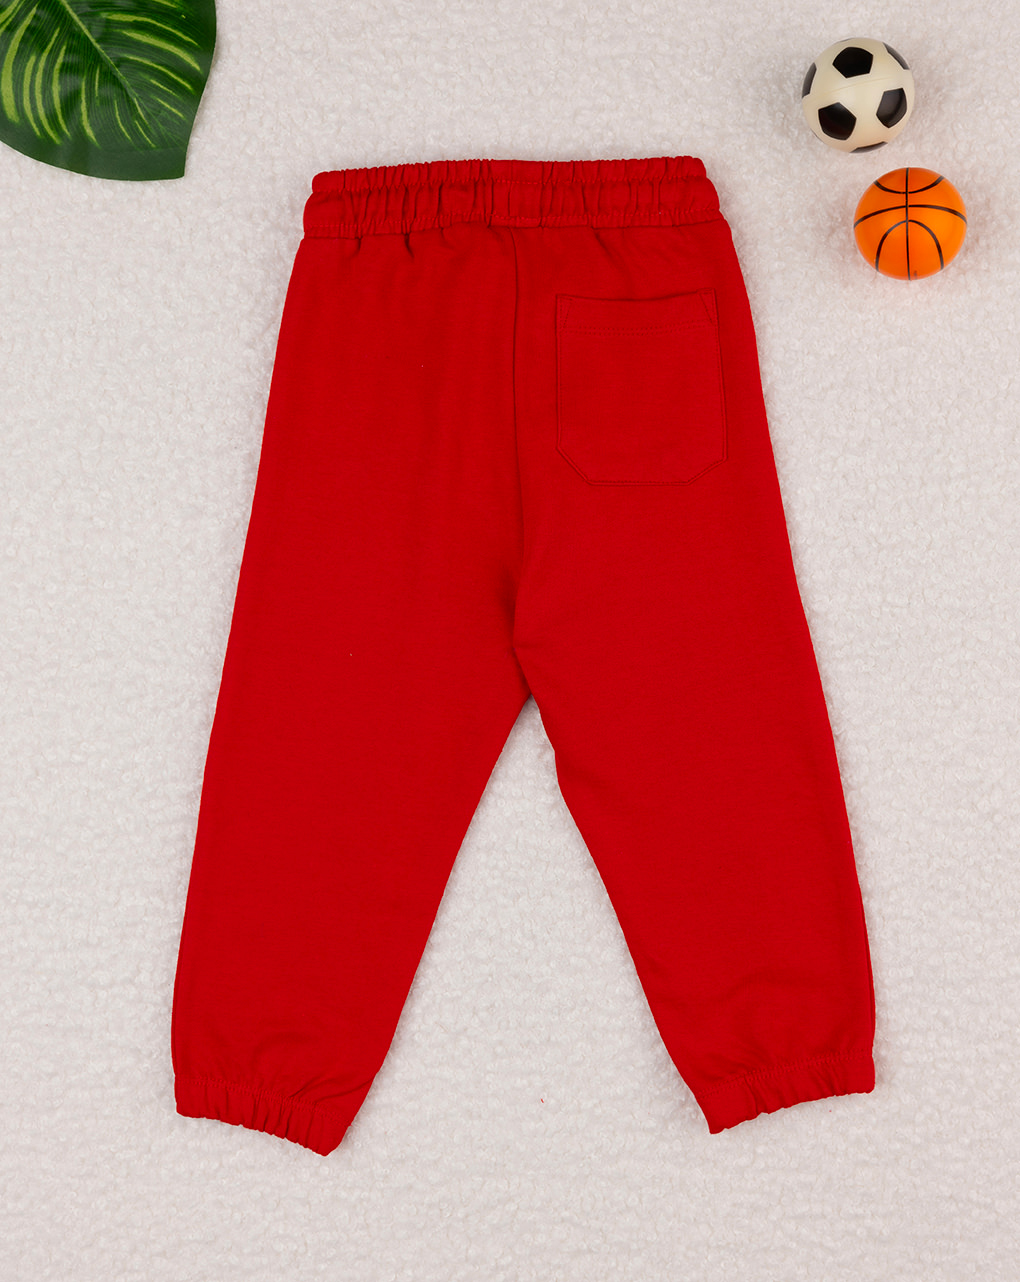 Pantalones deportivos rojos para niños - Prénatal